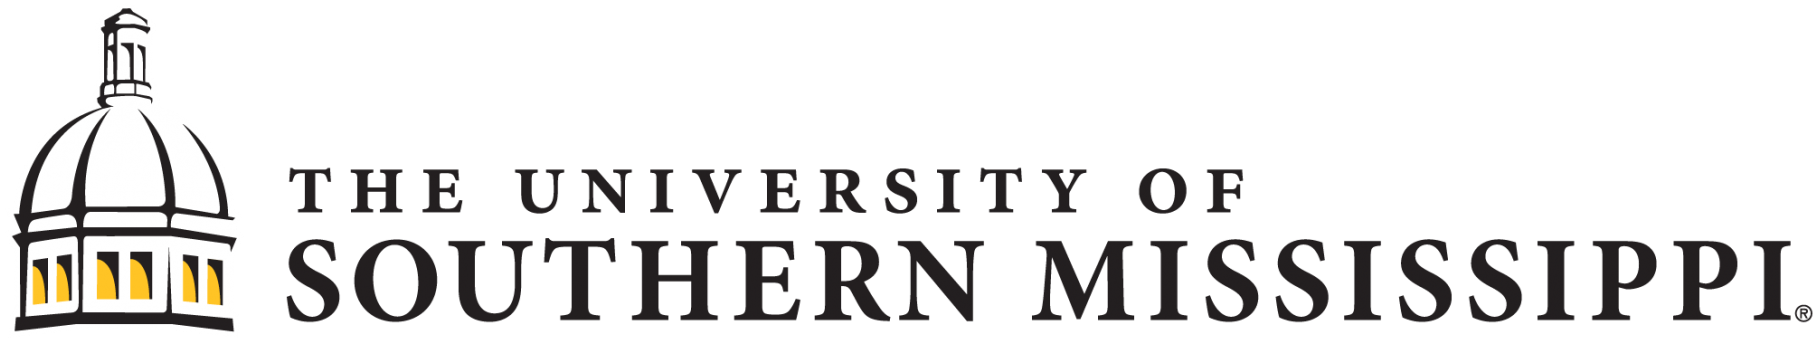 University Logos The University Of Southern Mississippi - University Of Southern Mississippi (1920x466)